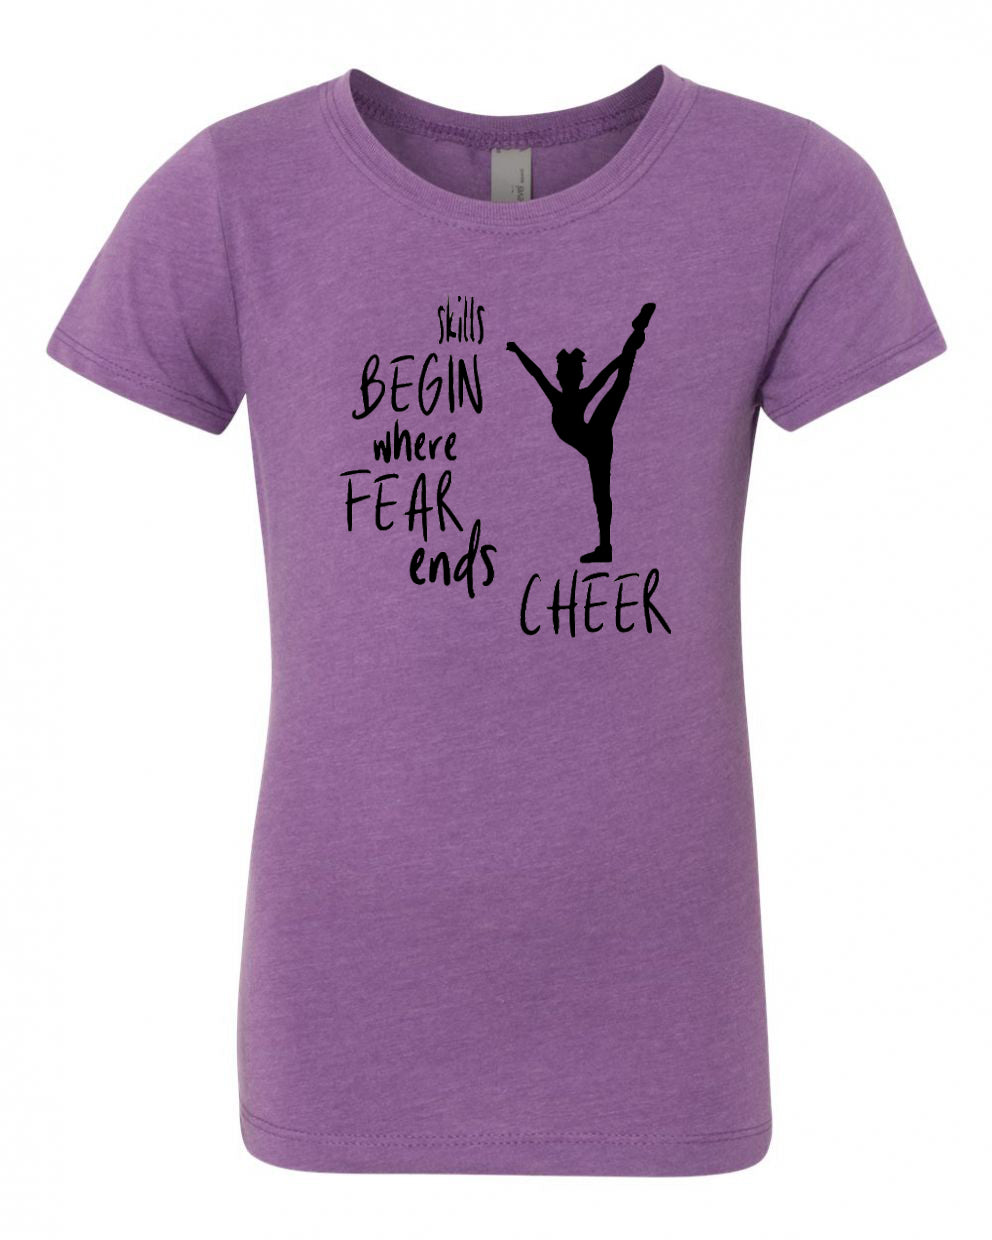 Skills Begin Where Fear Ends Cheer Girls T-Shirt Purple Berry